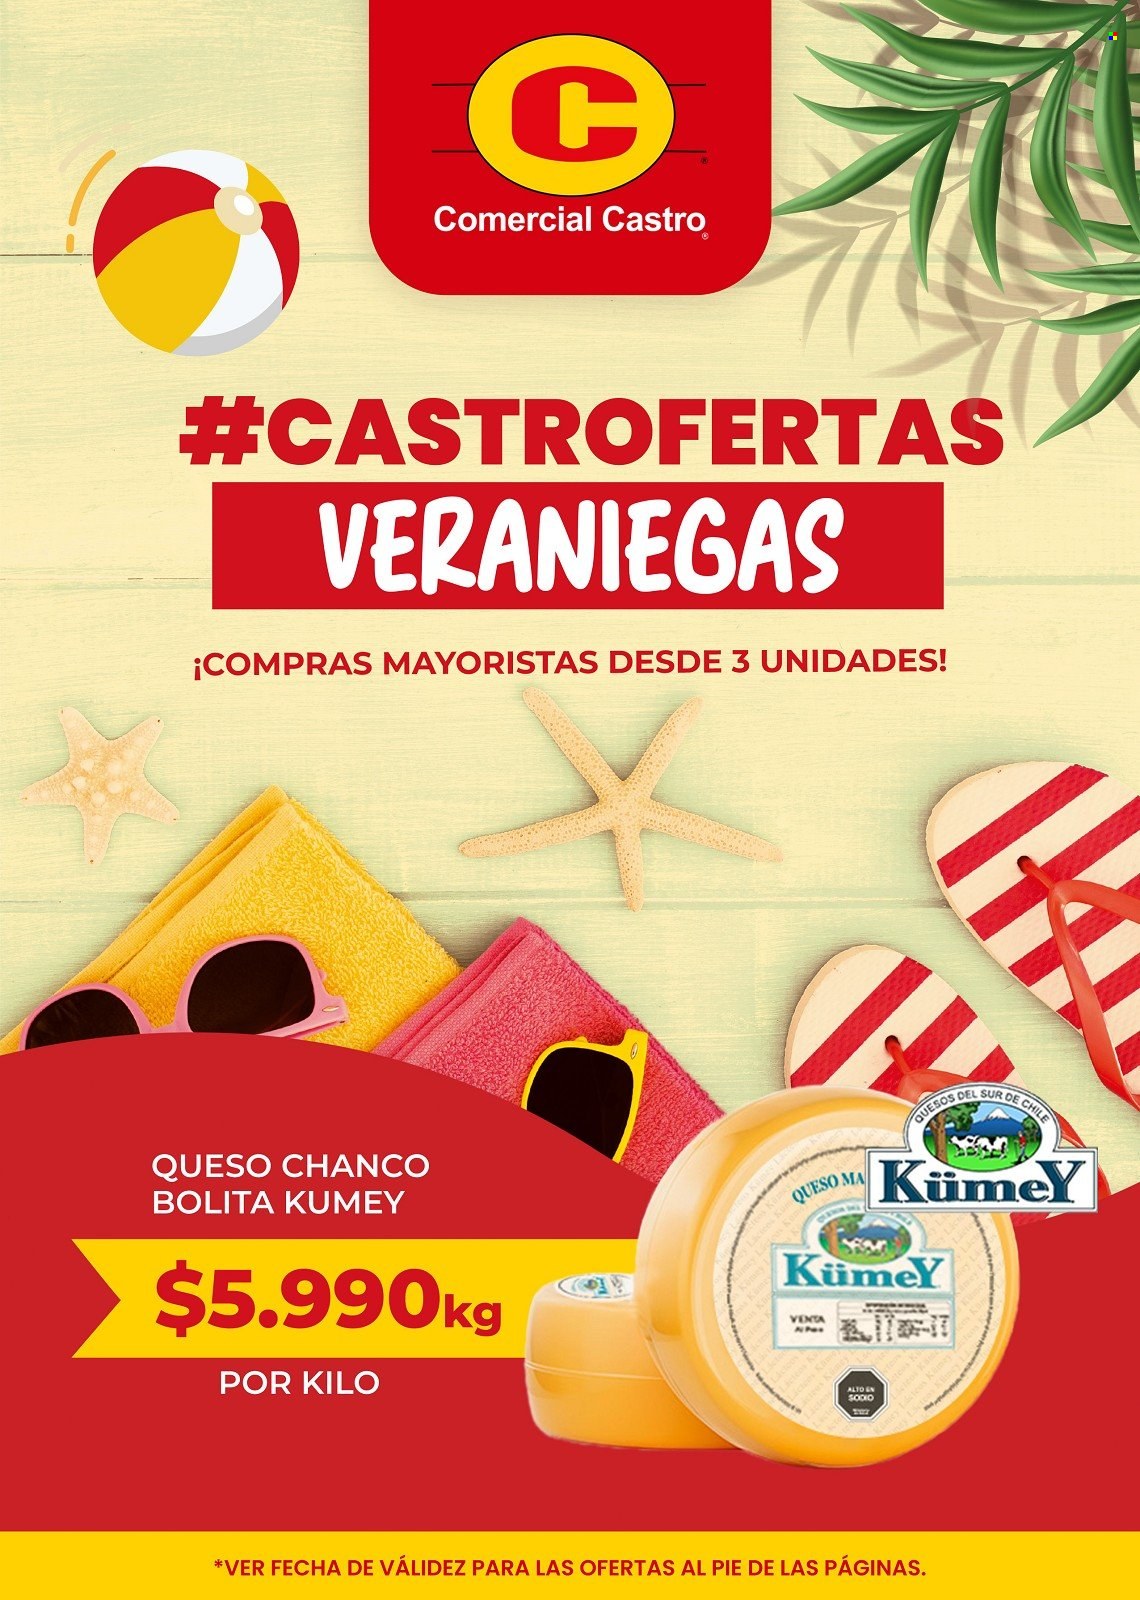 Catálogo Comercial Castro - 15.1.2022 - 31.1.2022 - Ventas - queso. Página 1.